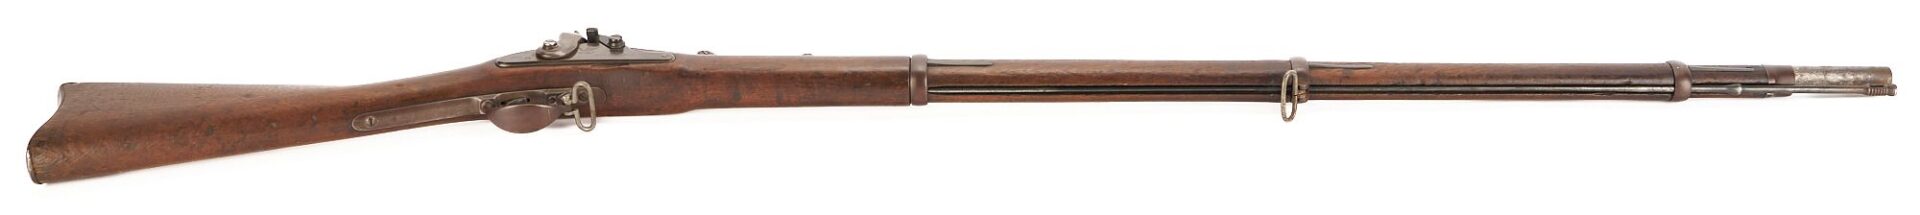 Lot 547: 1863 Springfield Trapdoor .50 cal. with Allin Trapdoor Conversion; Civil War Period Bayonet